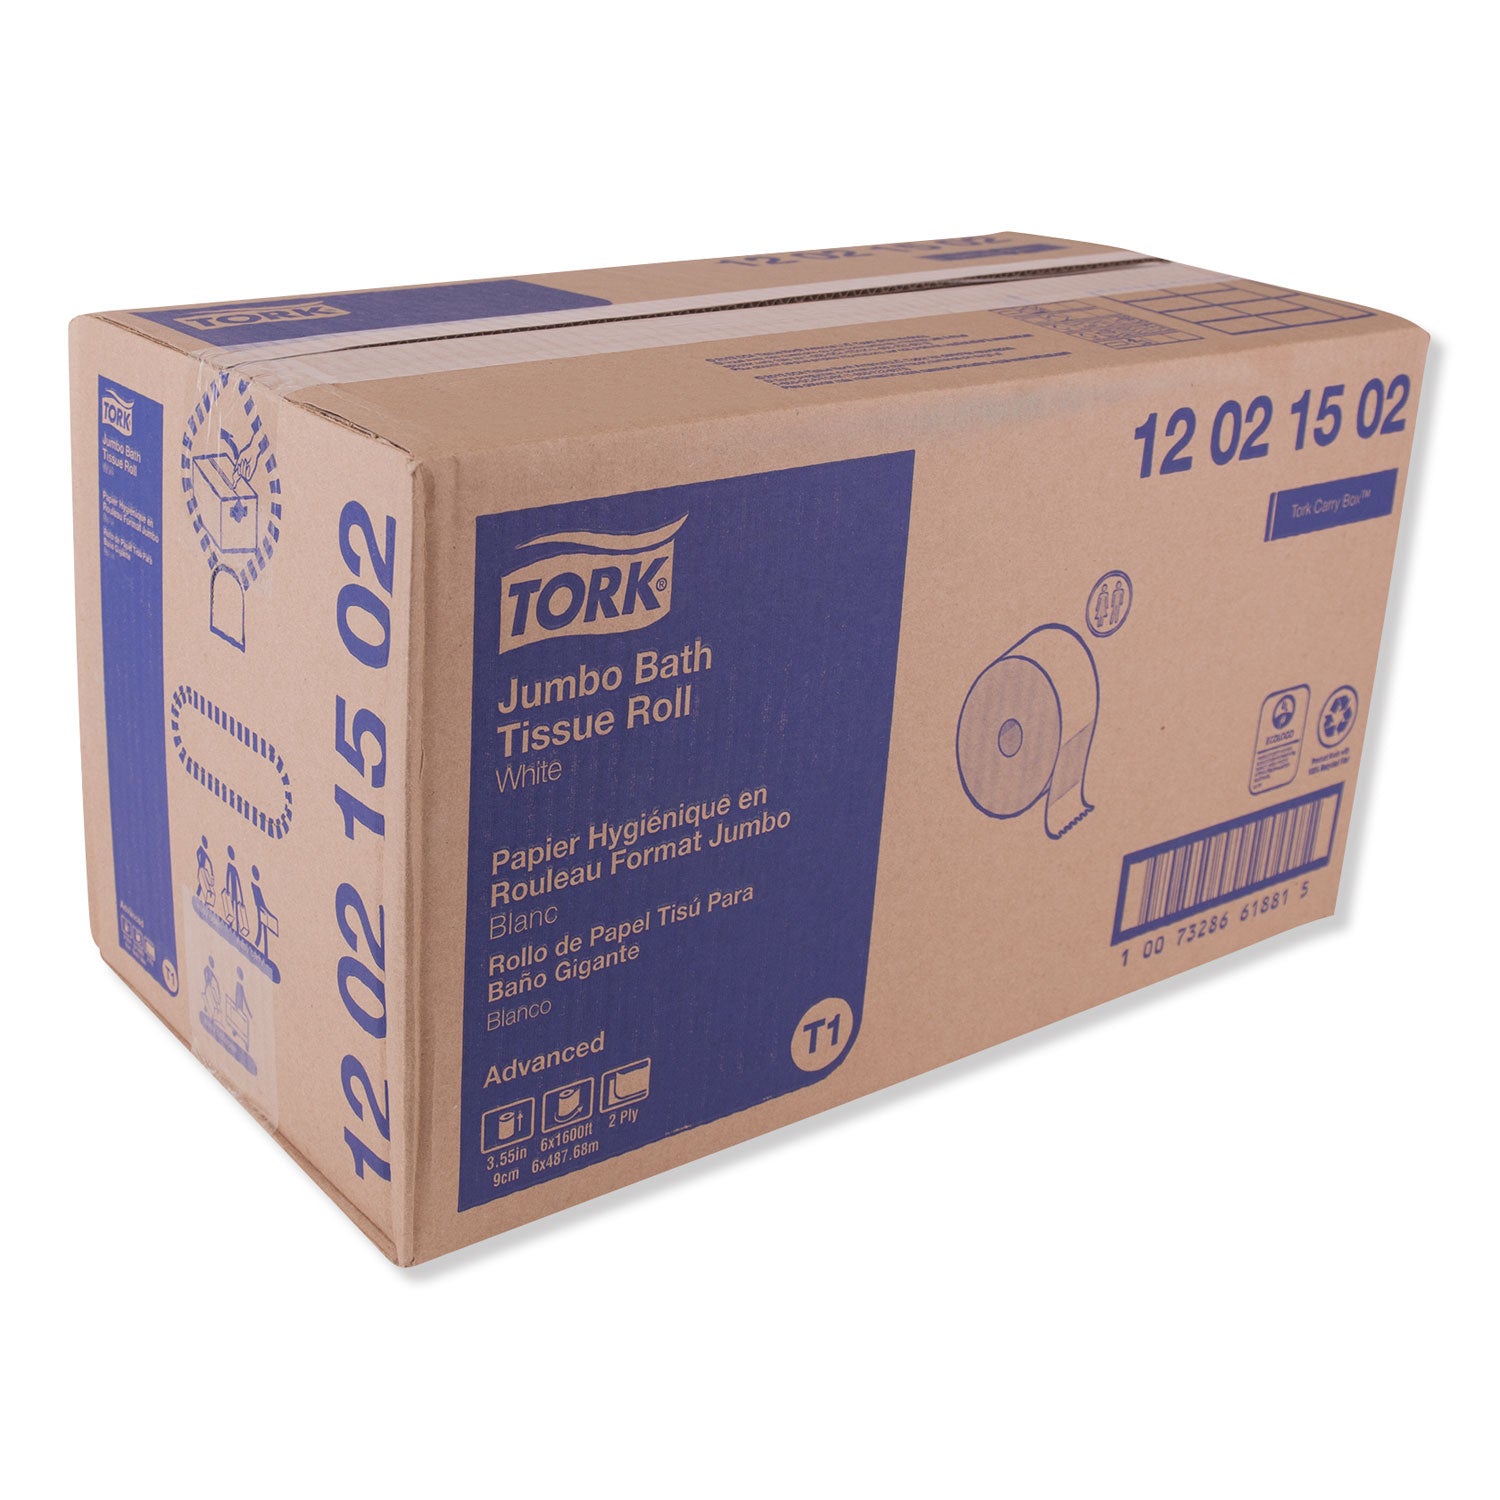 advanced-jumbo-bath-tissue-septic-safe-2-ply-white-348-x-1600-ft-6-rolls-carton_trk12021502 - 2